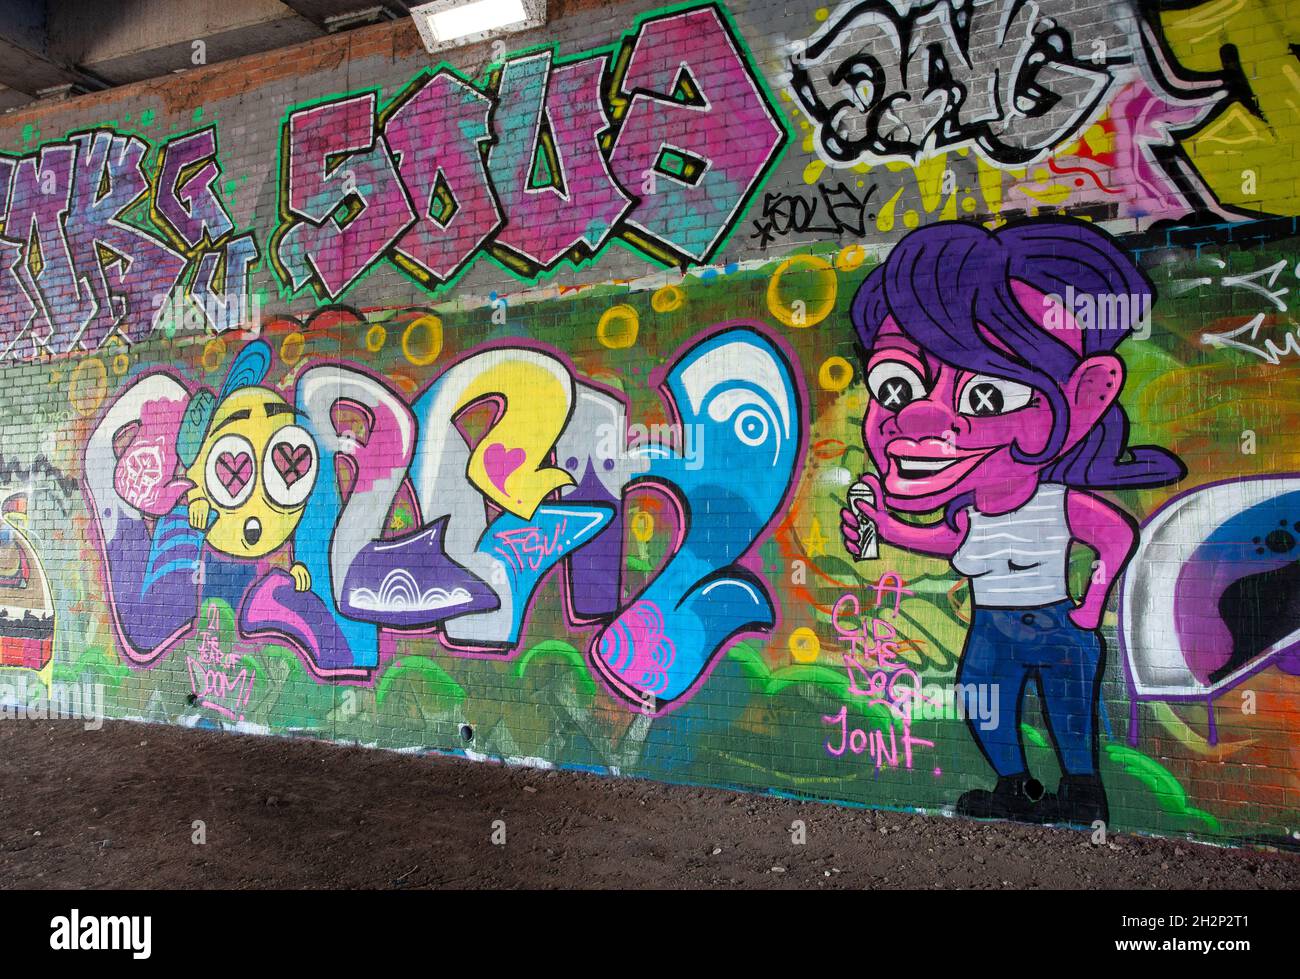 Farbenfrohe Graffiti/Street Art am Flussufer des Flusses Aire in Leeds, West Yorkshire Stockfoto